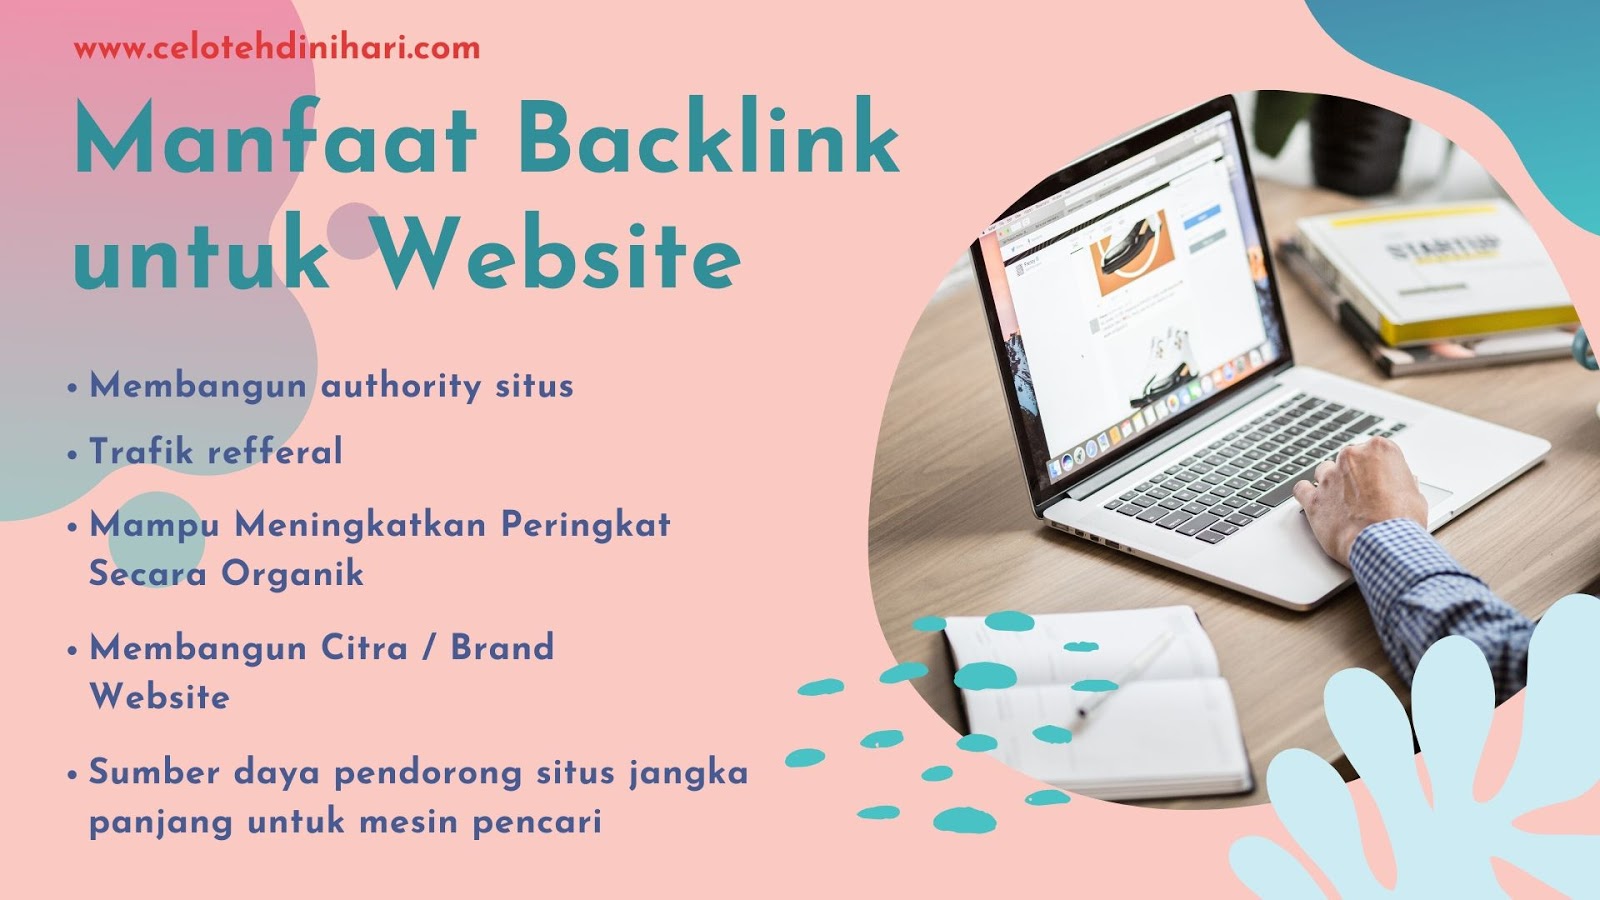 beli backlink di jawalink.com